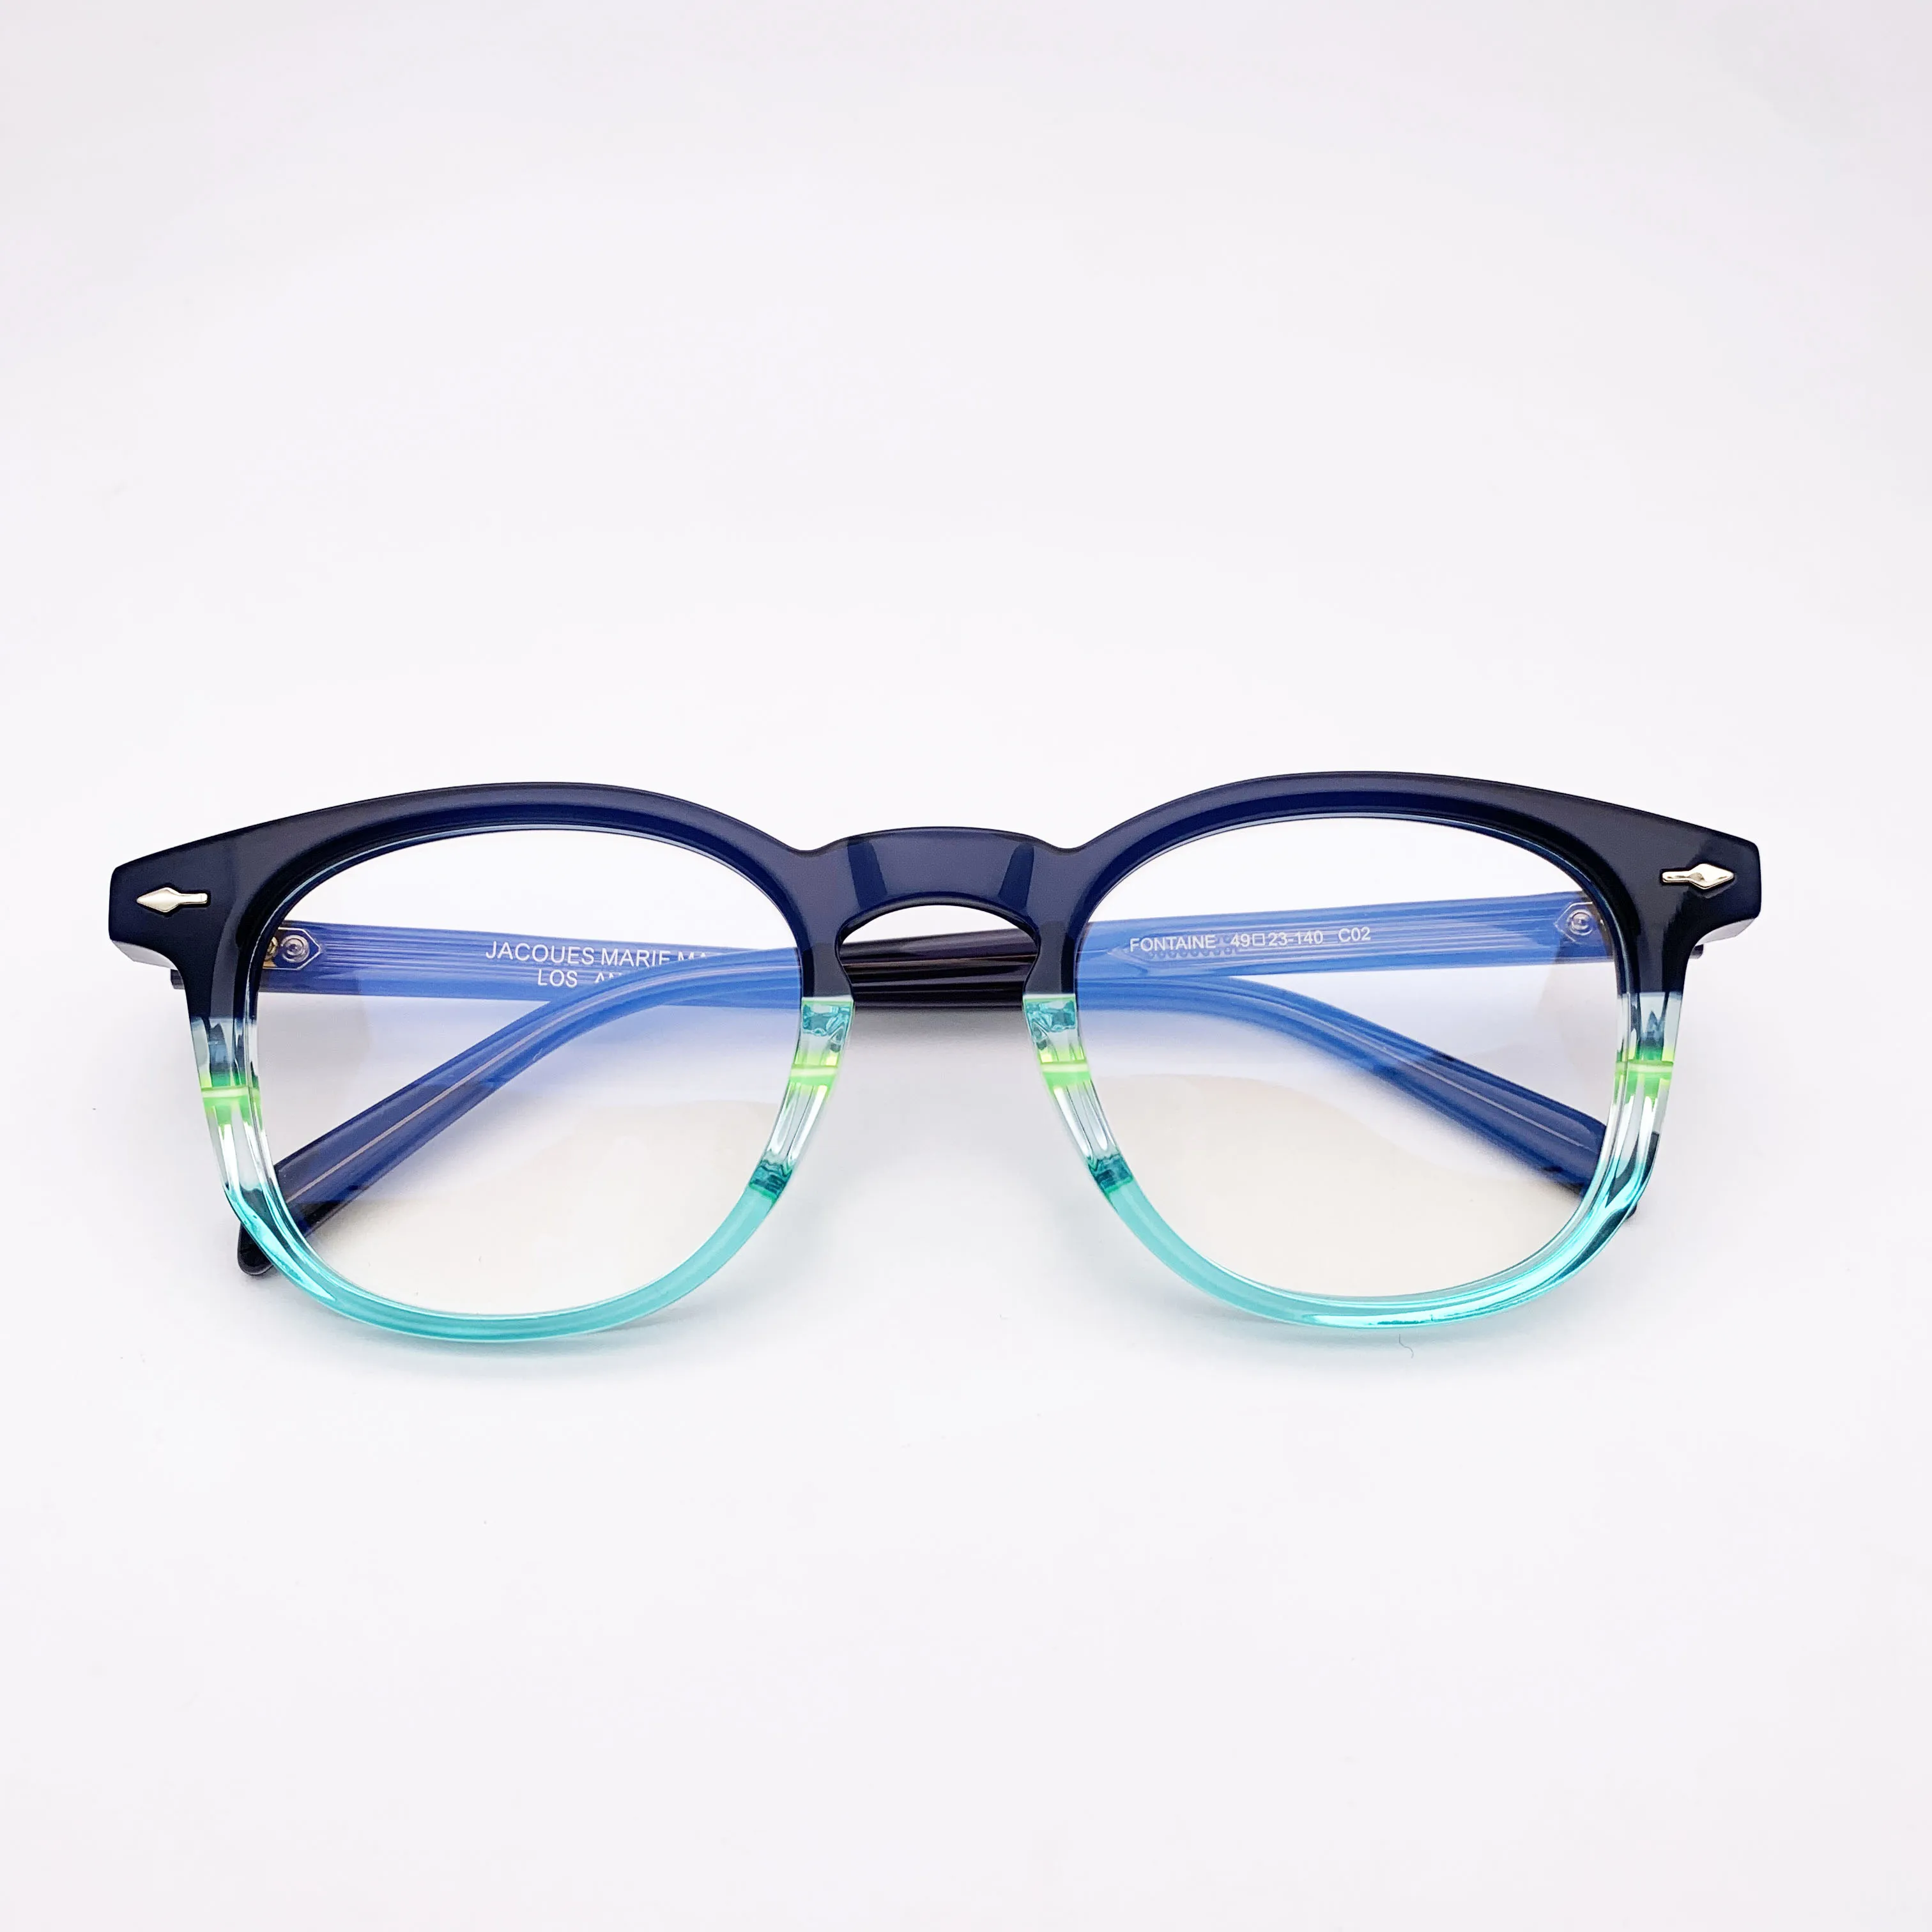 

JMM FONTAINE Steampunk Style Luxury Acetate Glasses Frames Men Fashion Classical Retro Handmade Eyeglasses Round Oval Eyewear